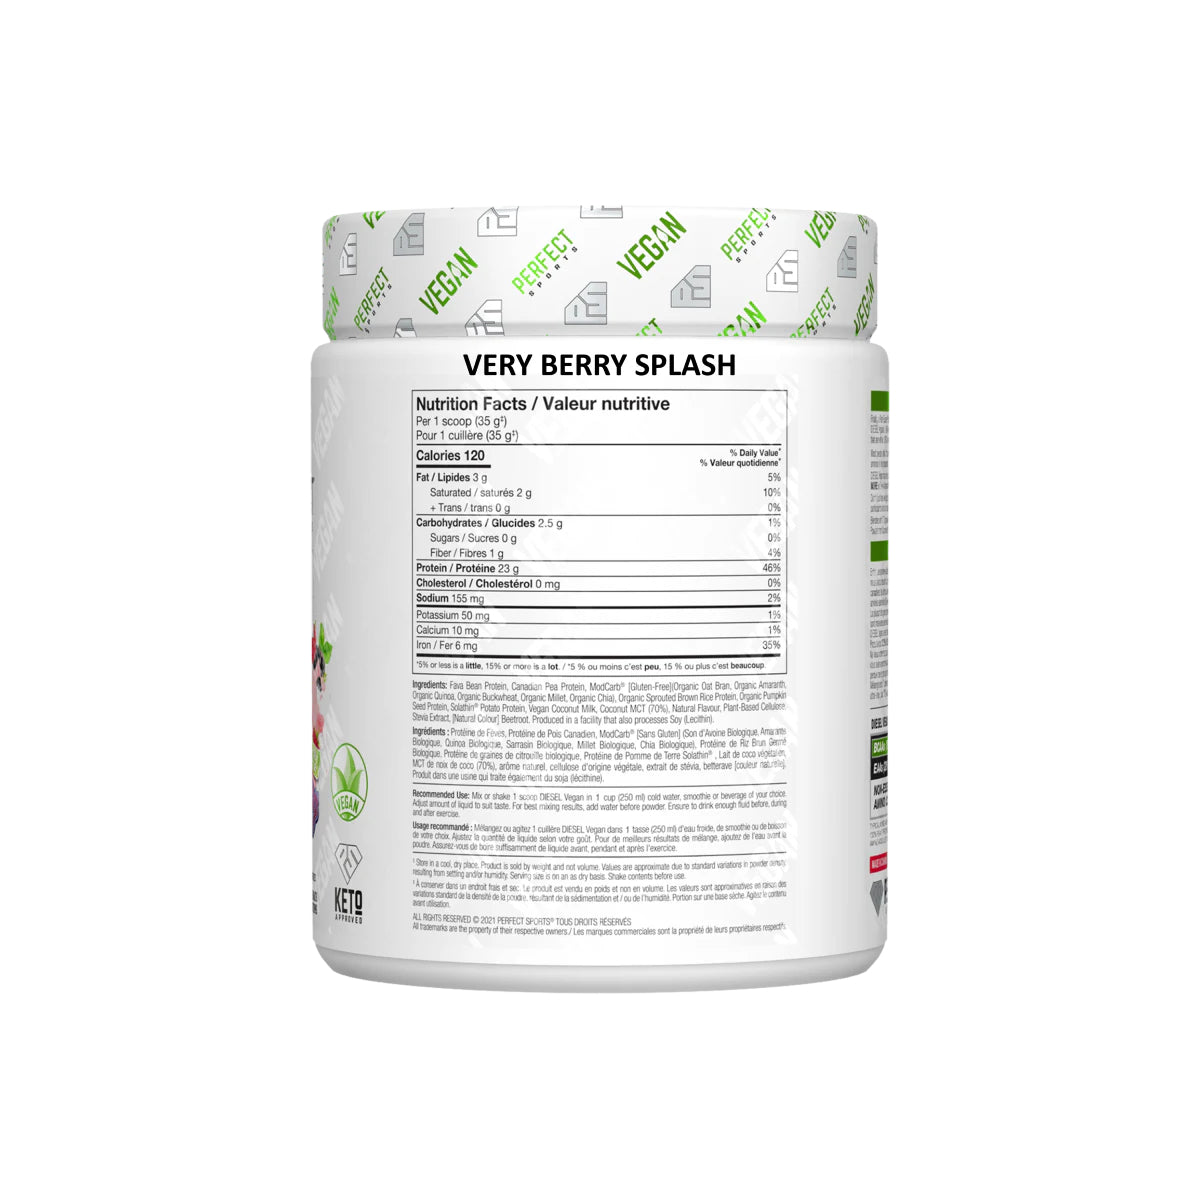 Perfect Sports DIESEL Vegan Protein Very Berry / 350g